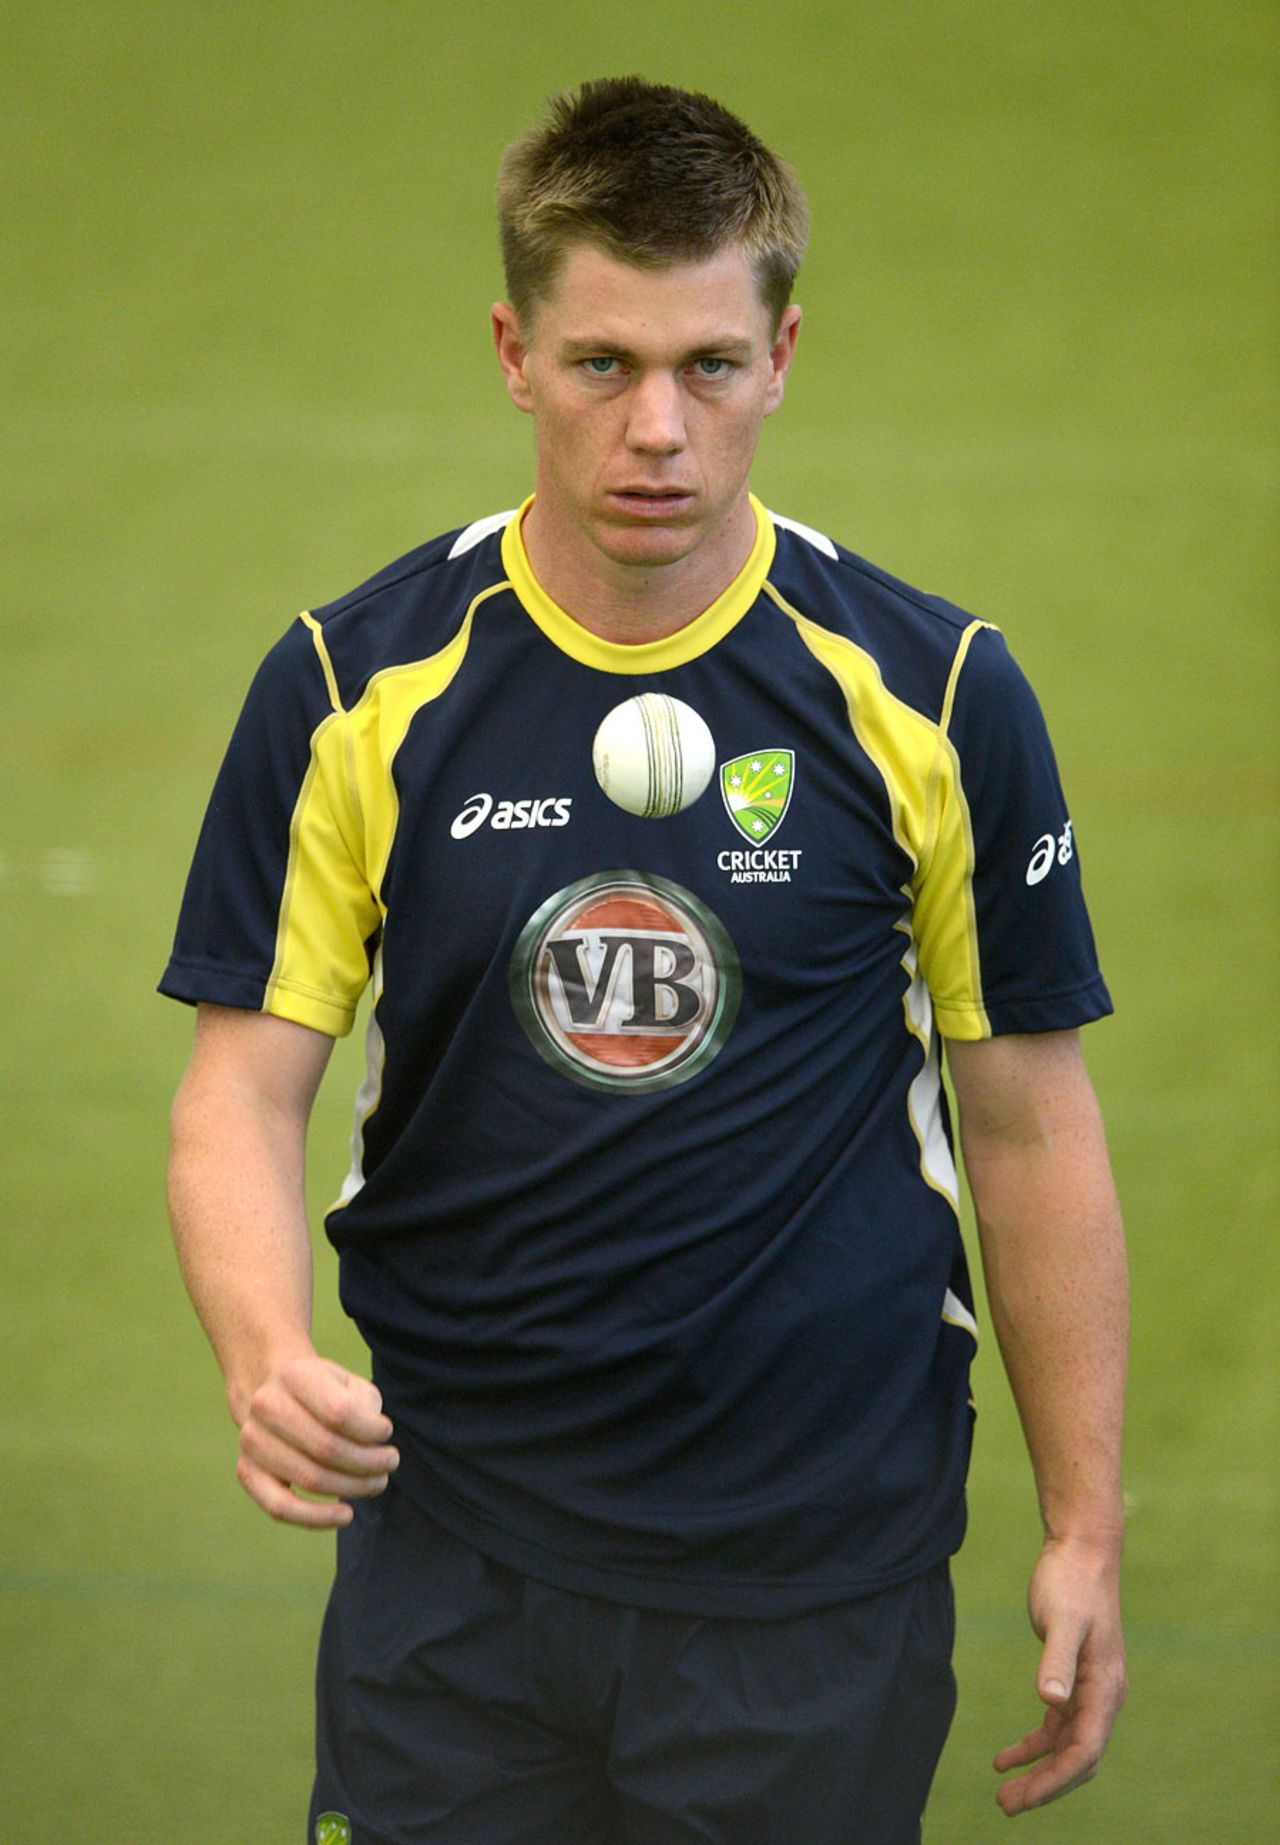 Xavier Doherty is under pressure to tie down England's batsmen, Edgbaston, July 3, 2012